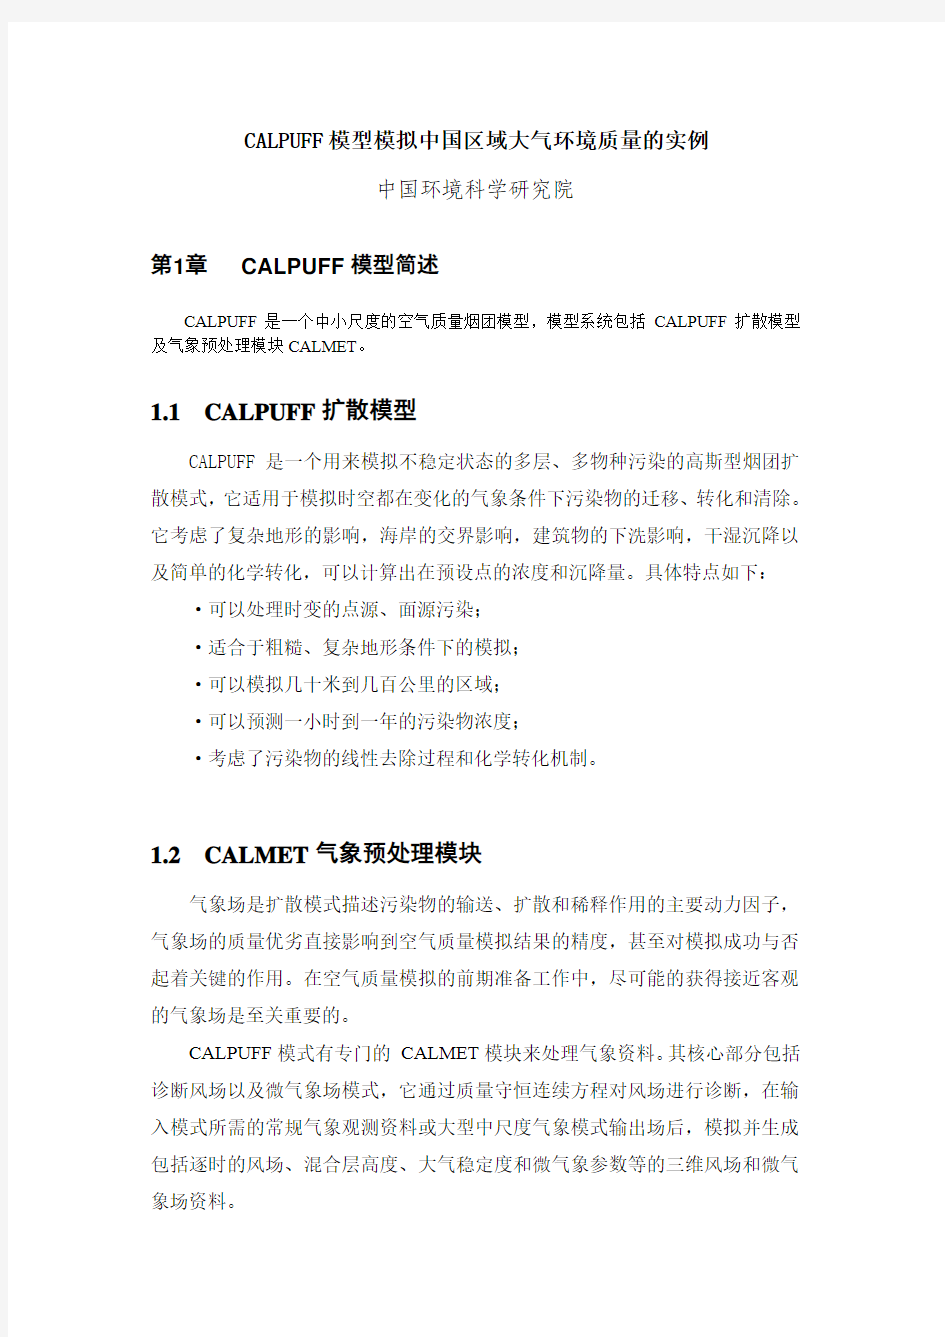 CALPUFF模型模拟中国区域大气环境质量的实例